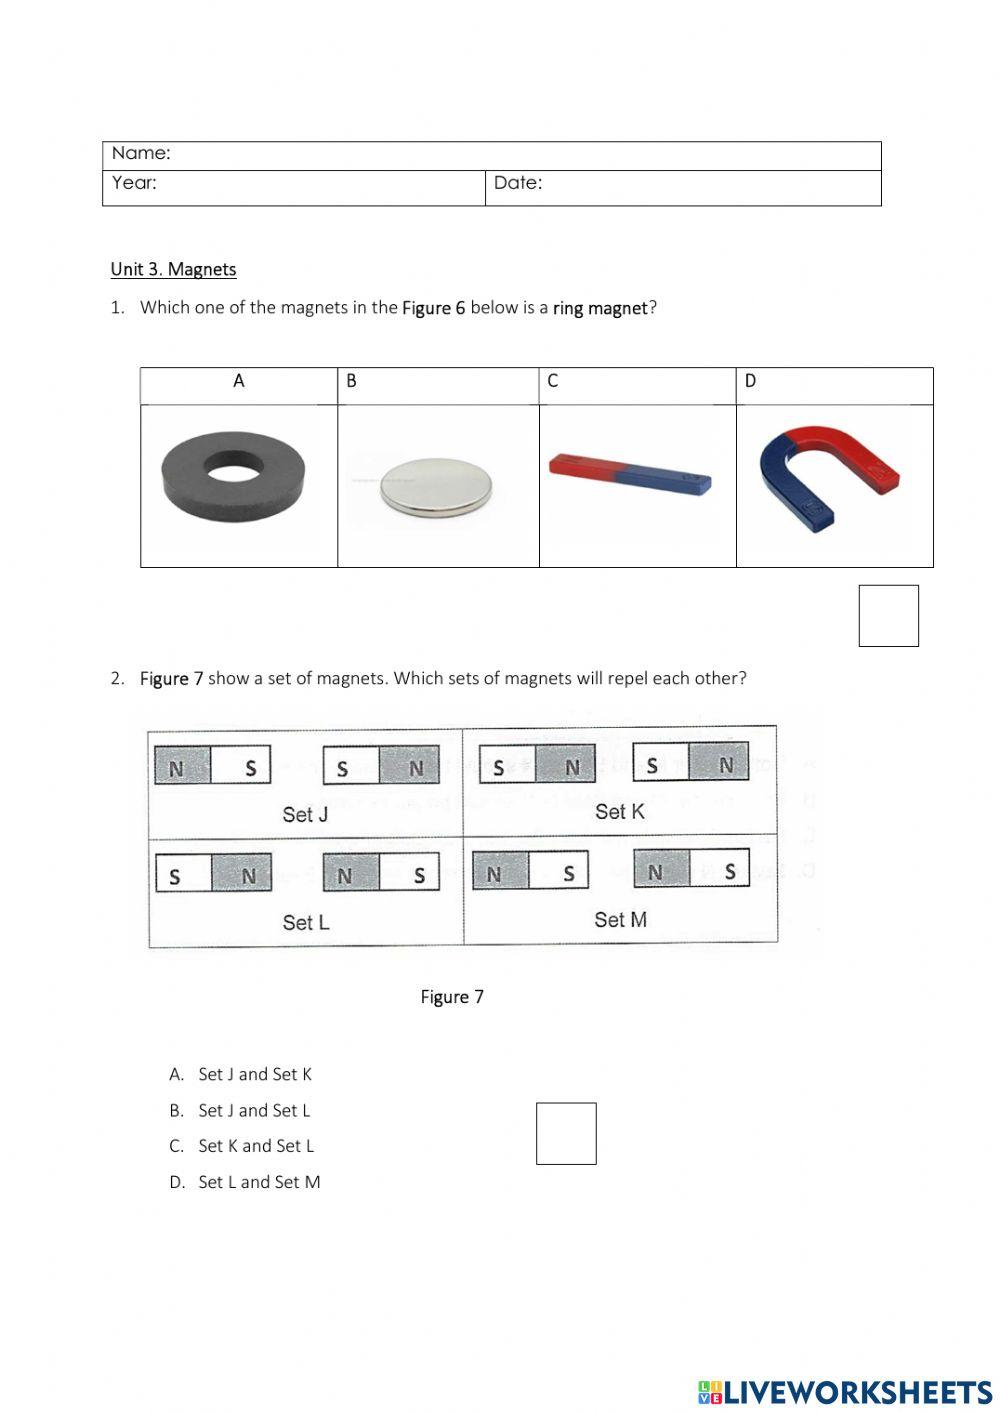 Magnets (Test 3)